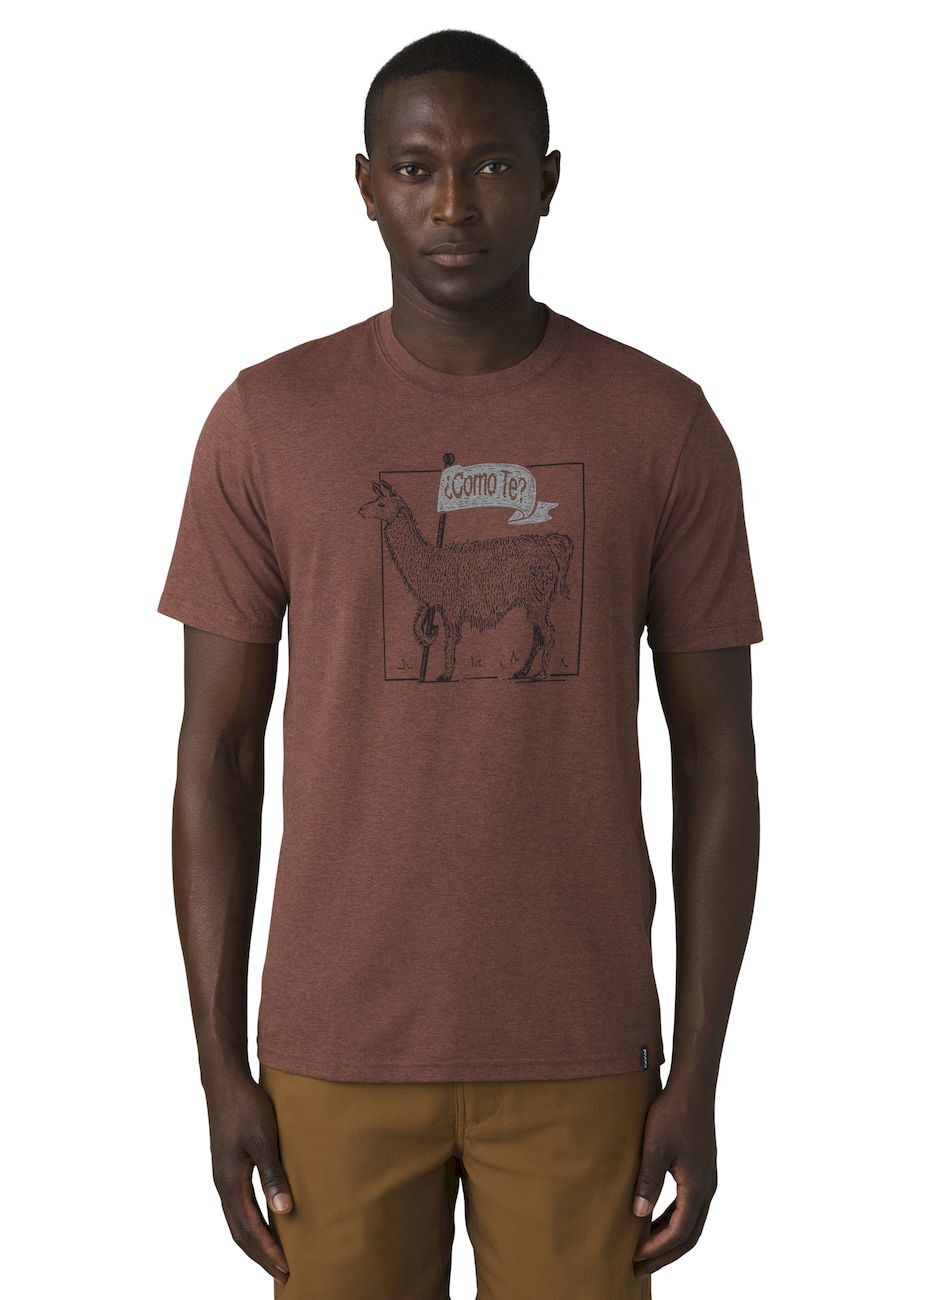 Prana Como Te Llama Journeyman 2 - Camiseta - Hombre